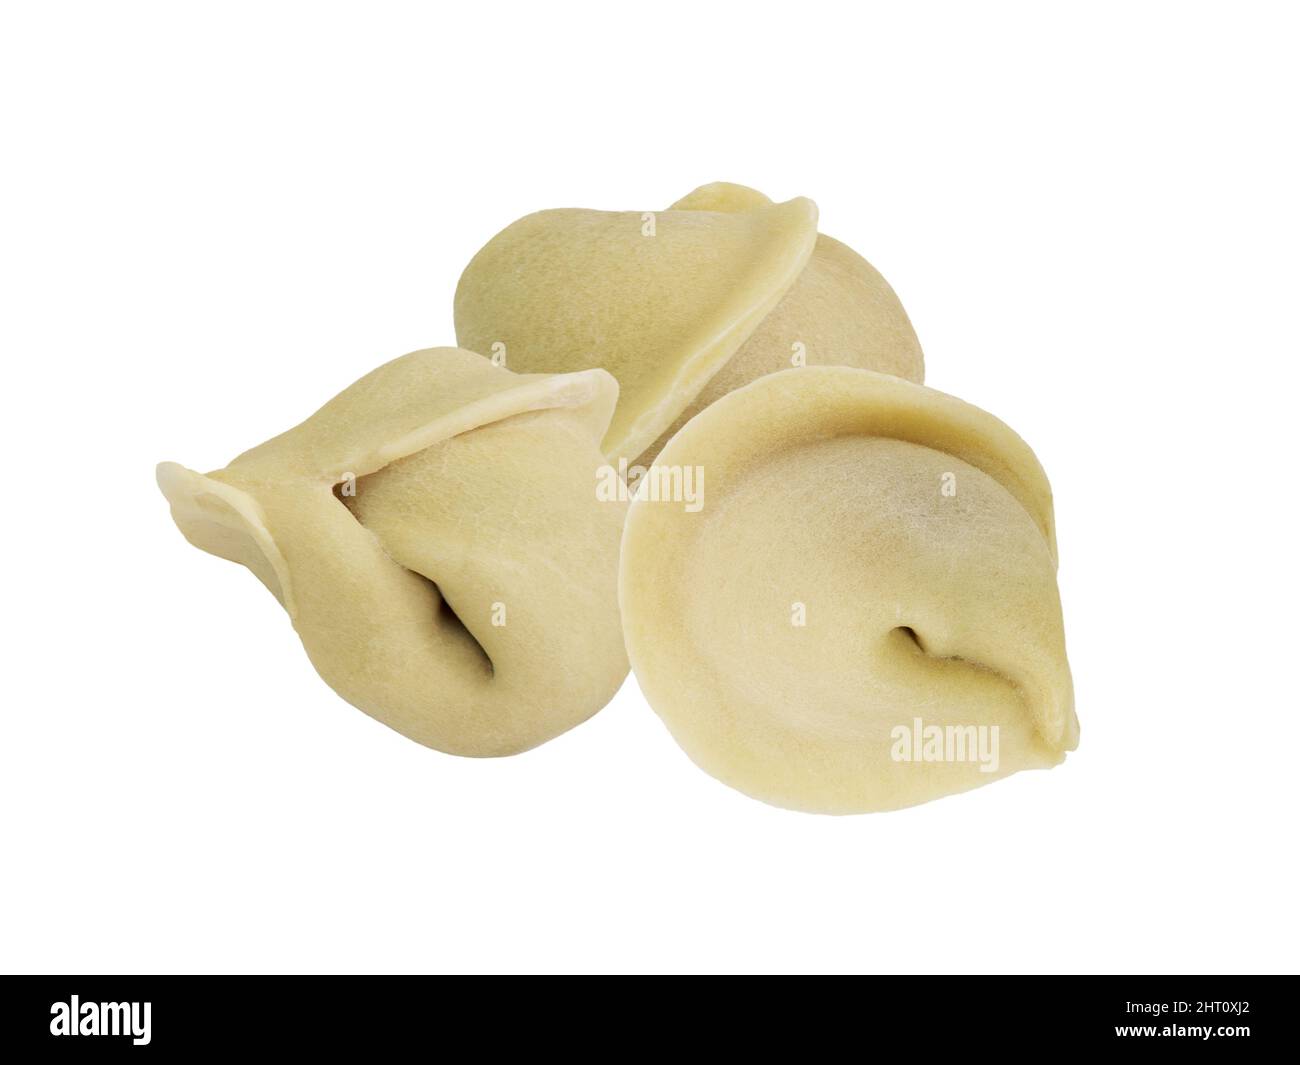 Dumplings, pelmeni, ravioli - isolated on white with clipping path Stock Photo